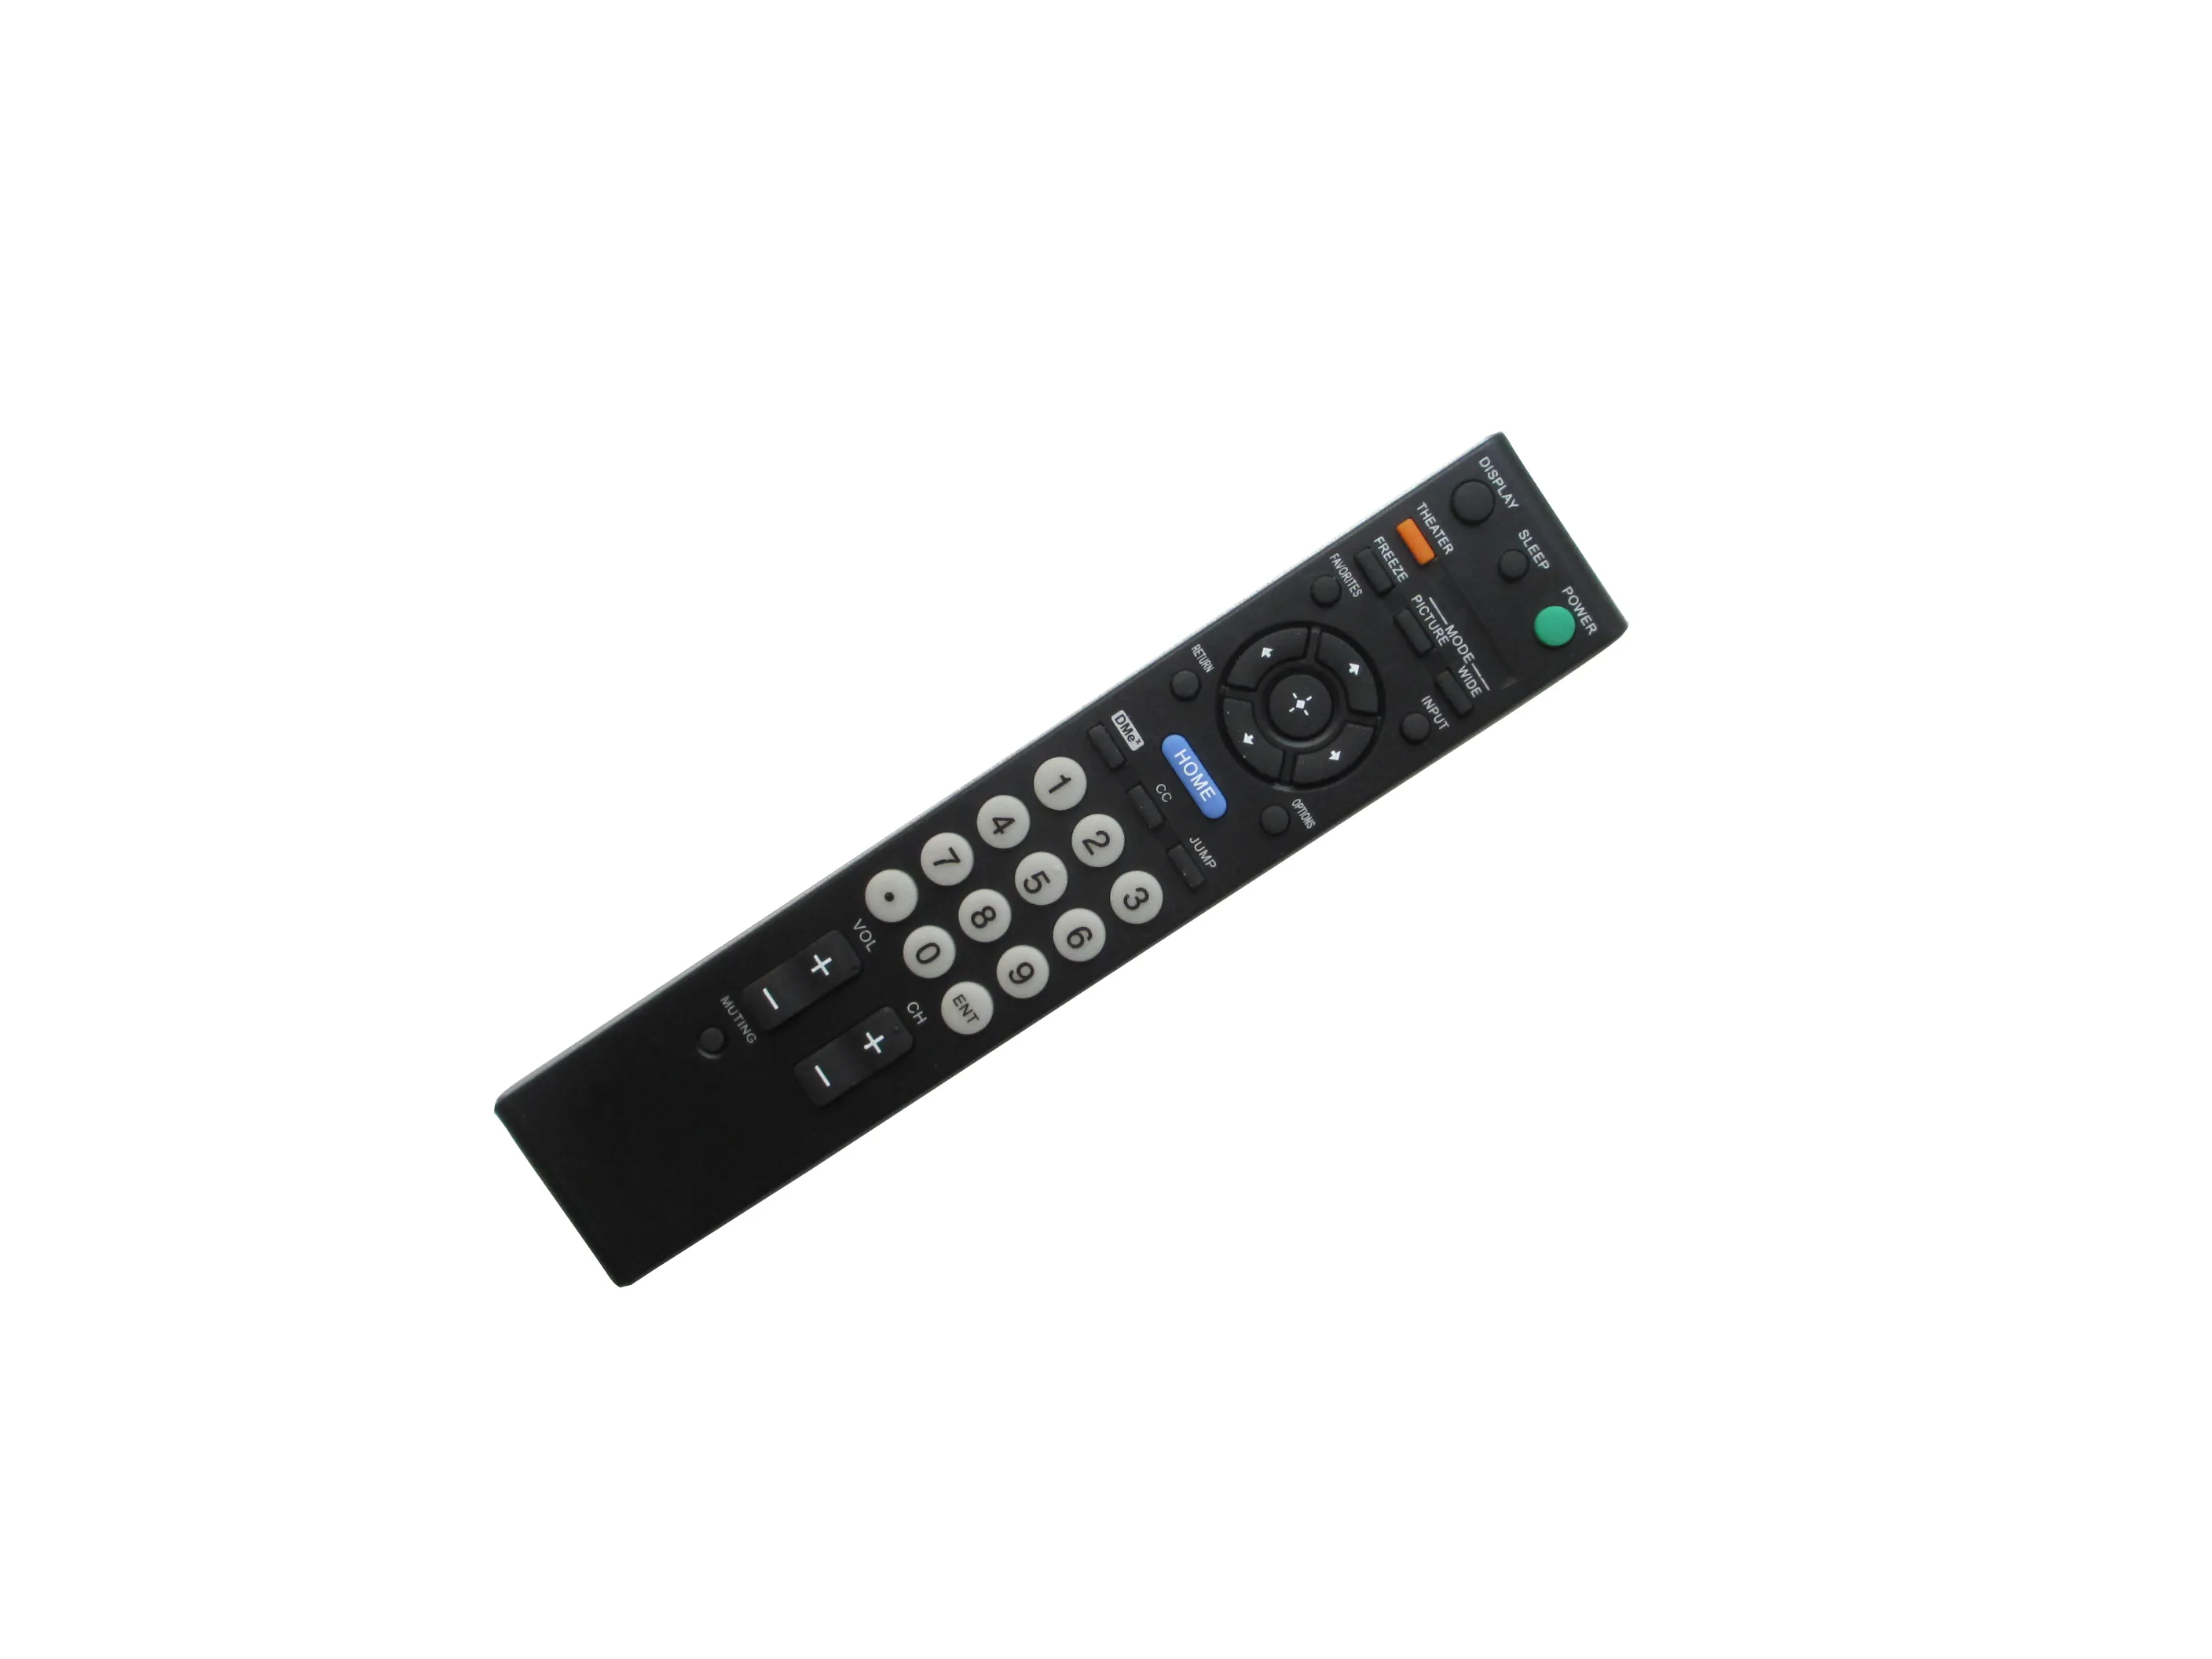 Telecomando per Sony KDL-26NL140 KDL-32M4000 KDL-32M4000R KDL-32M4000T KDL-32M4000W KDL-32N4000 KDL-32NL140 KDL-37M4000 KDL-37N4000 KDL-37NL140 LCD Bravia HDTV TV